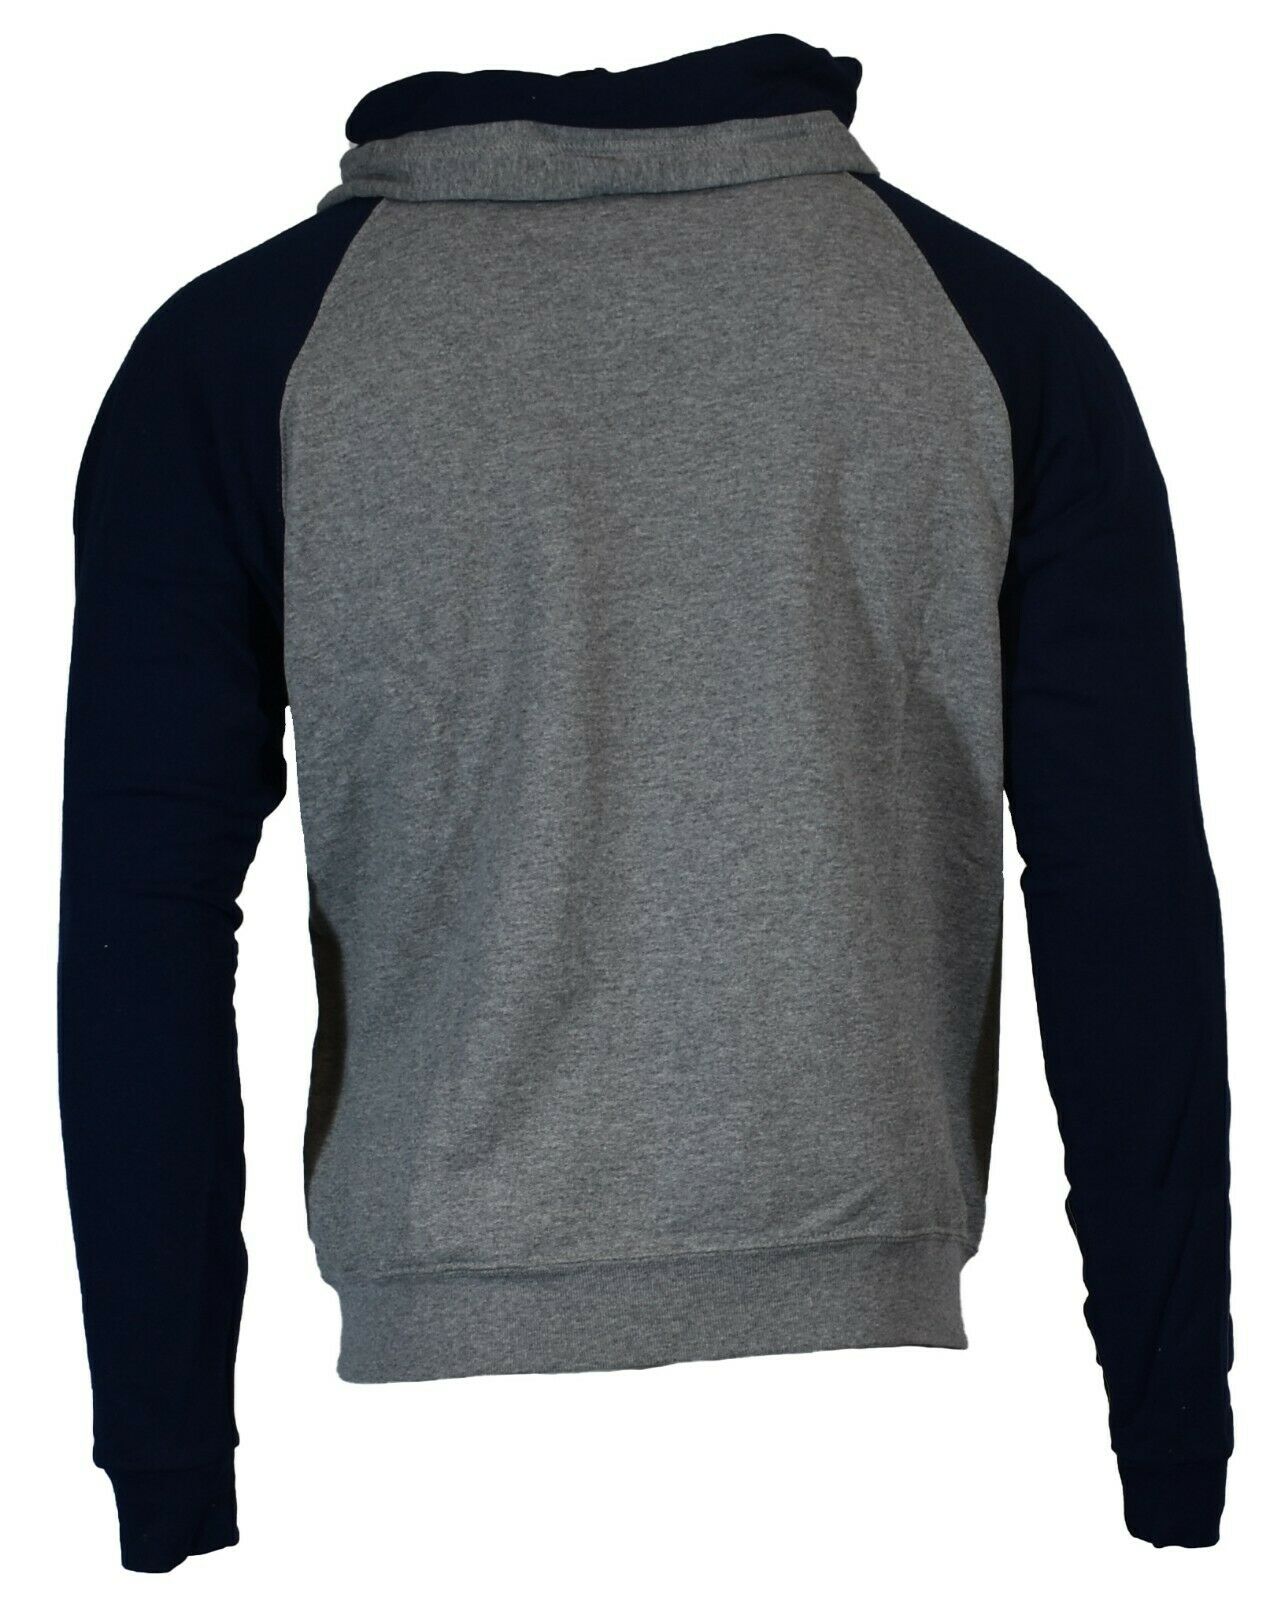 Smokey the Bear Pullover Hoodie - Unisex Sweatshirt - Camp Smokey Print - Grey with Blue Sleeves